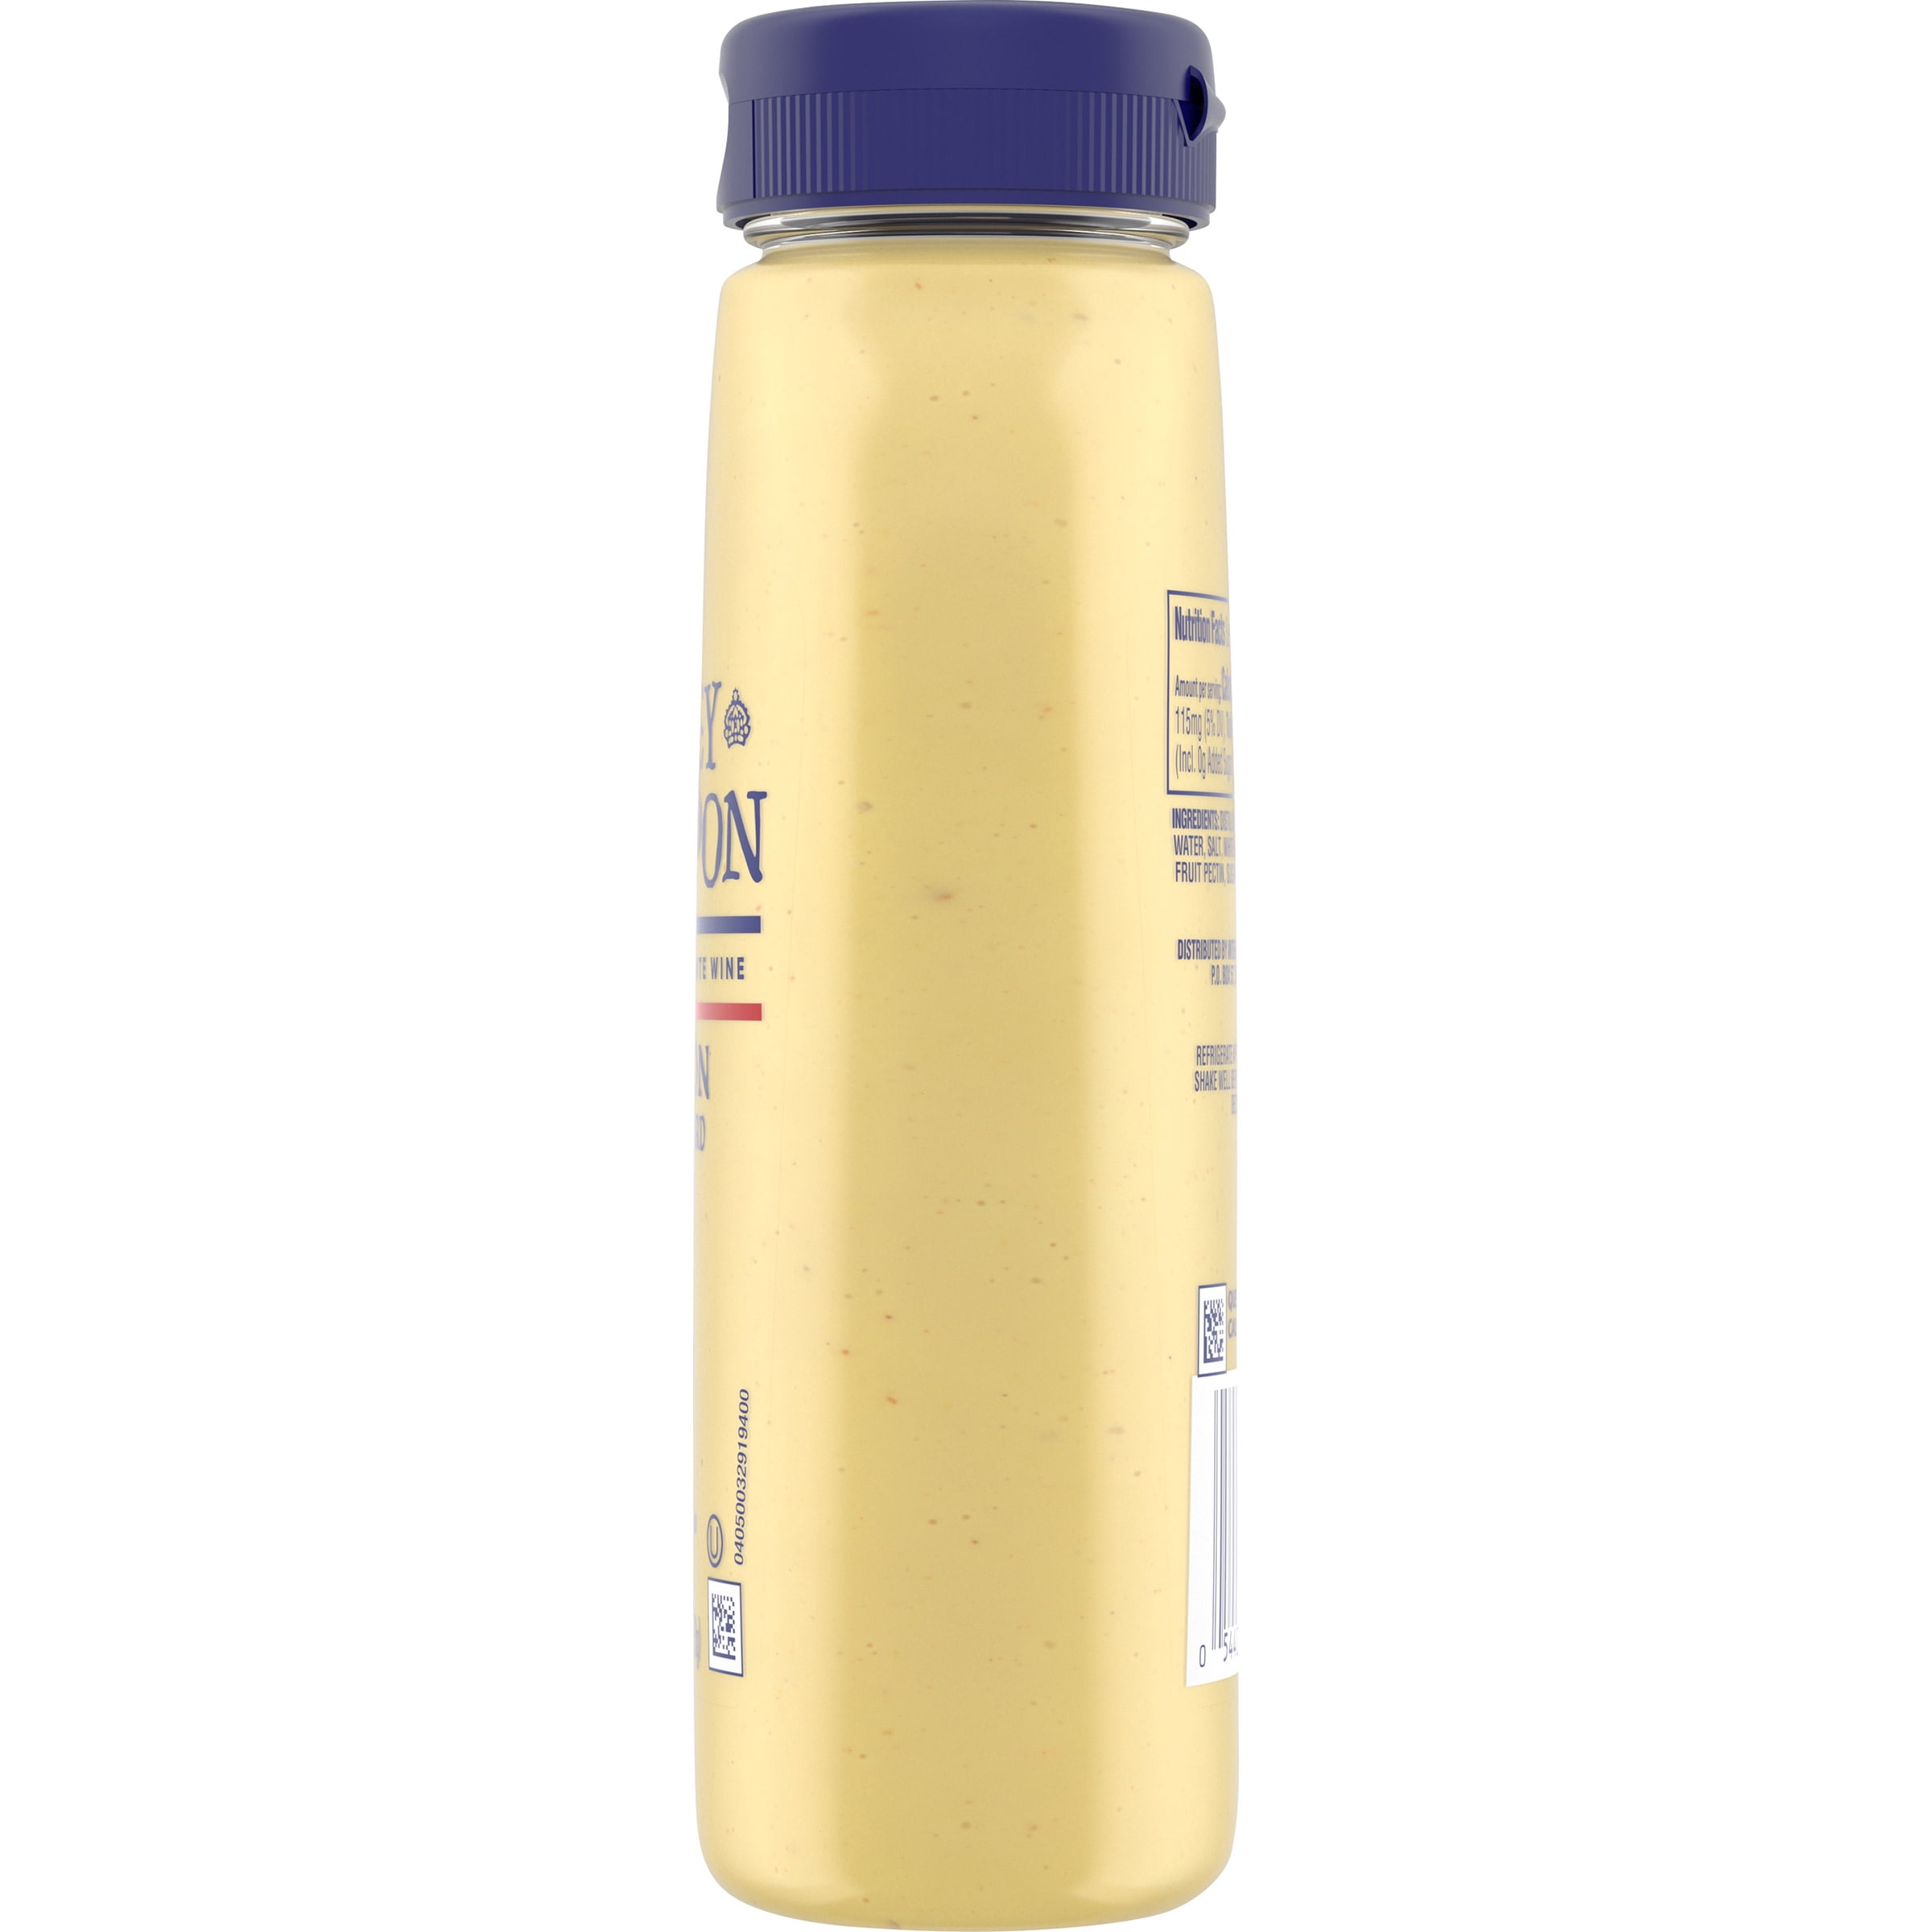 Grey Poupon Dijon Mustard, 10 oz. Squeeze Bottle - Walmart.com